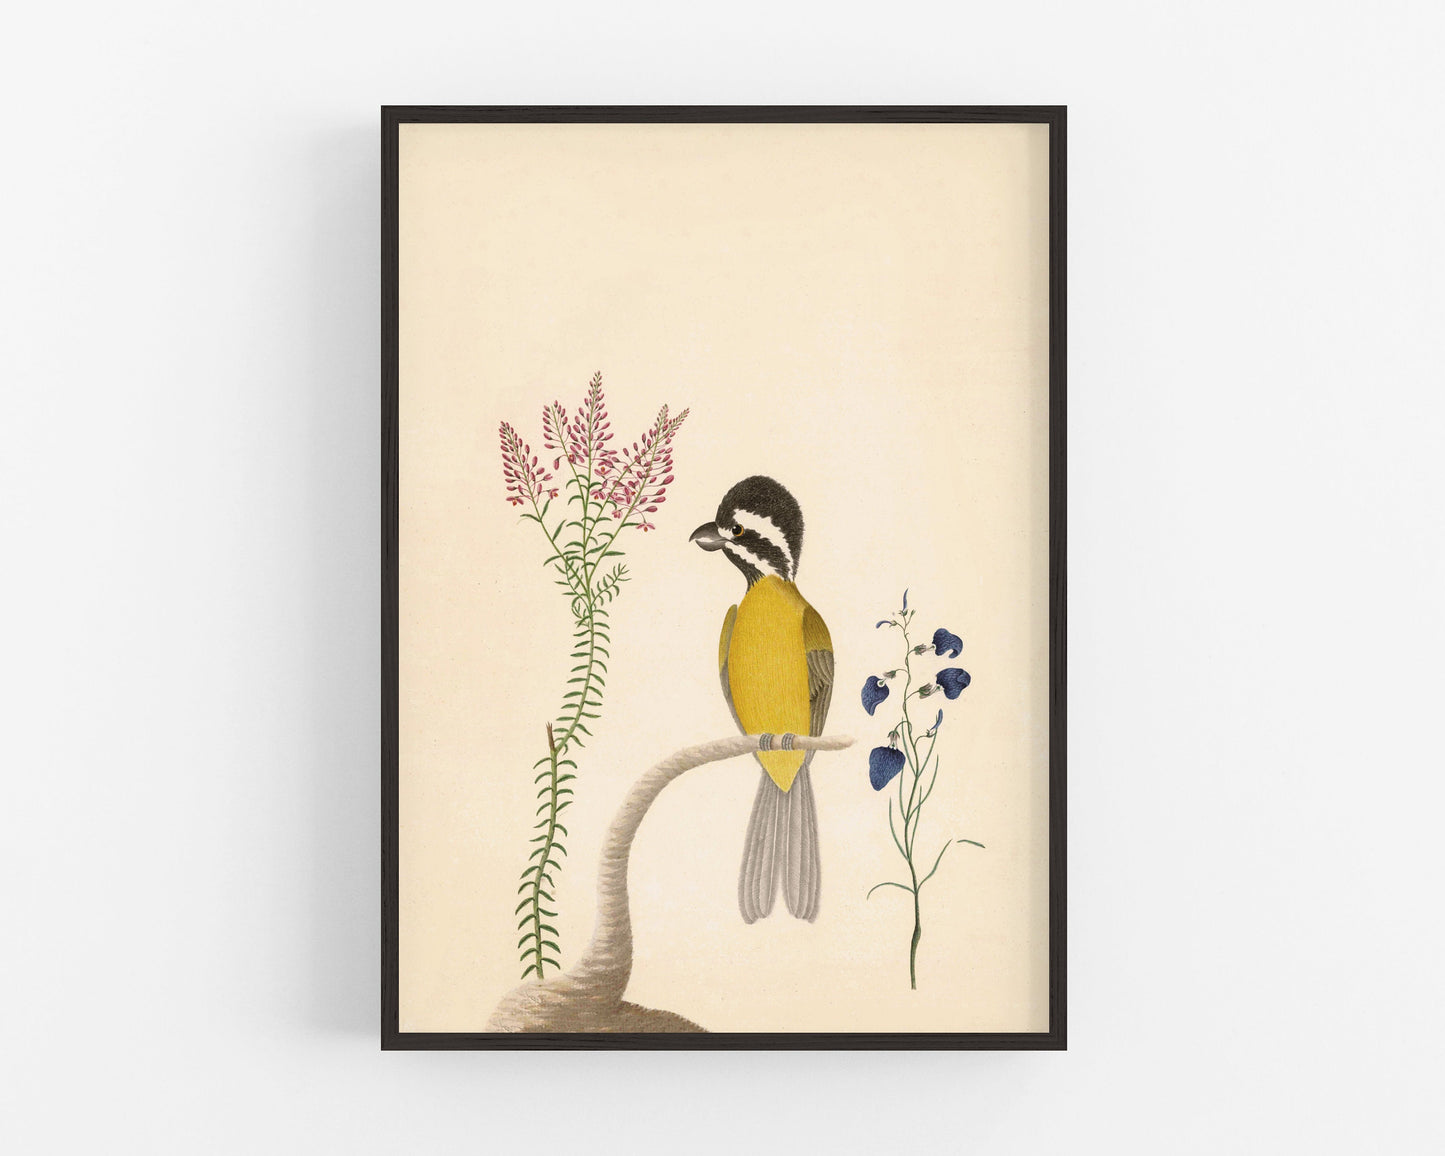 Shriketit and flower art | 18th century bird illustration | Natural history | Animal wall decor | Modern vintage décor | Eco-friendly gift